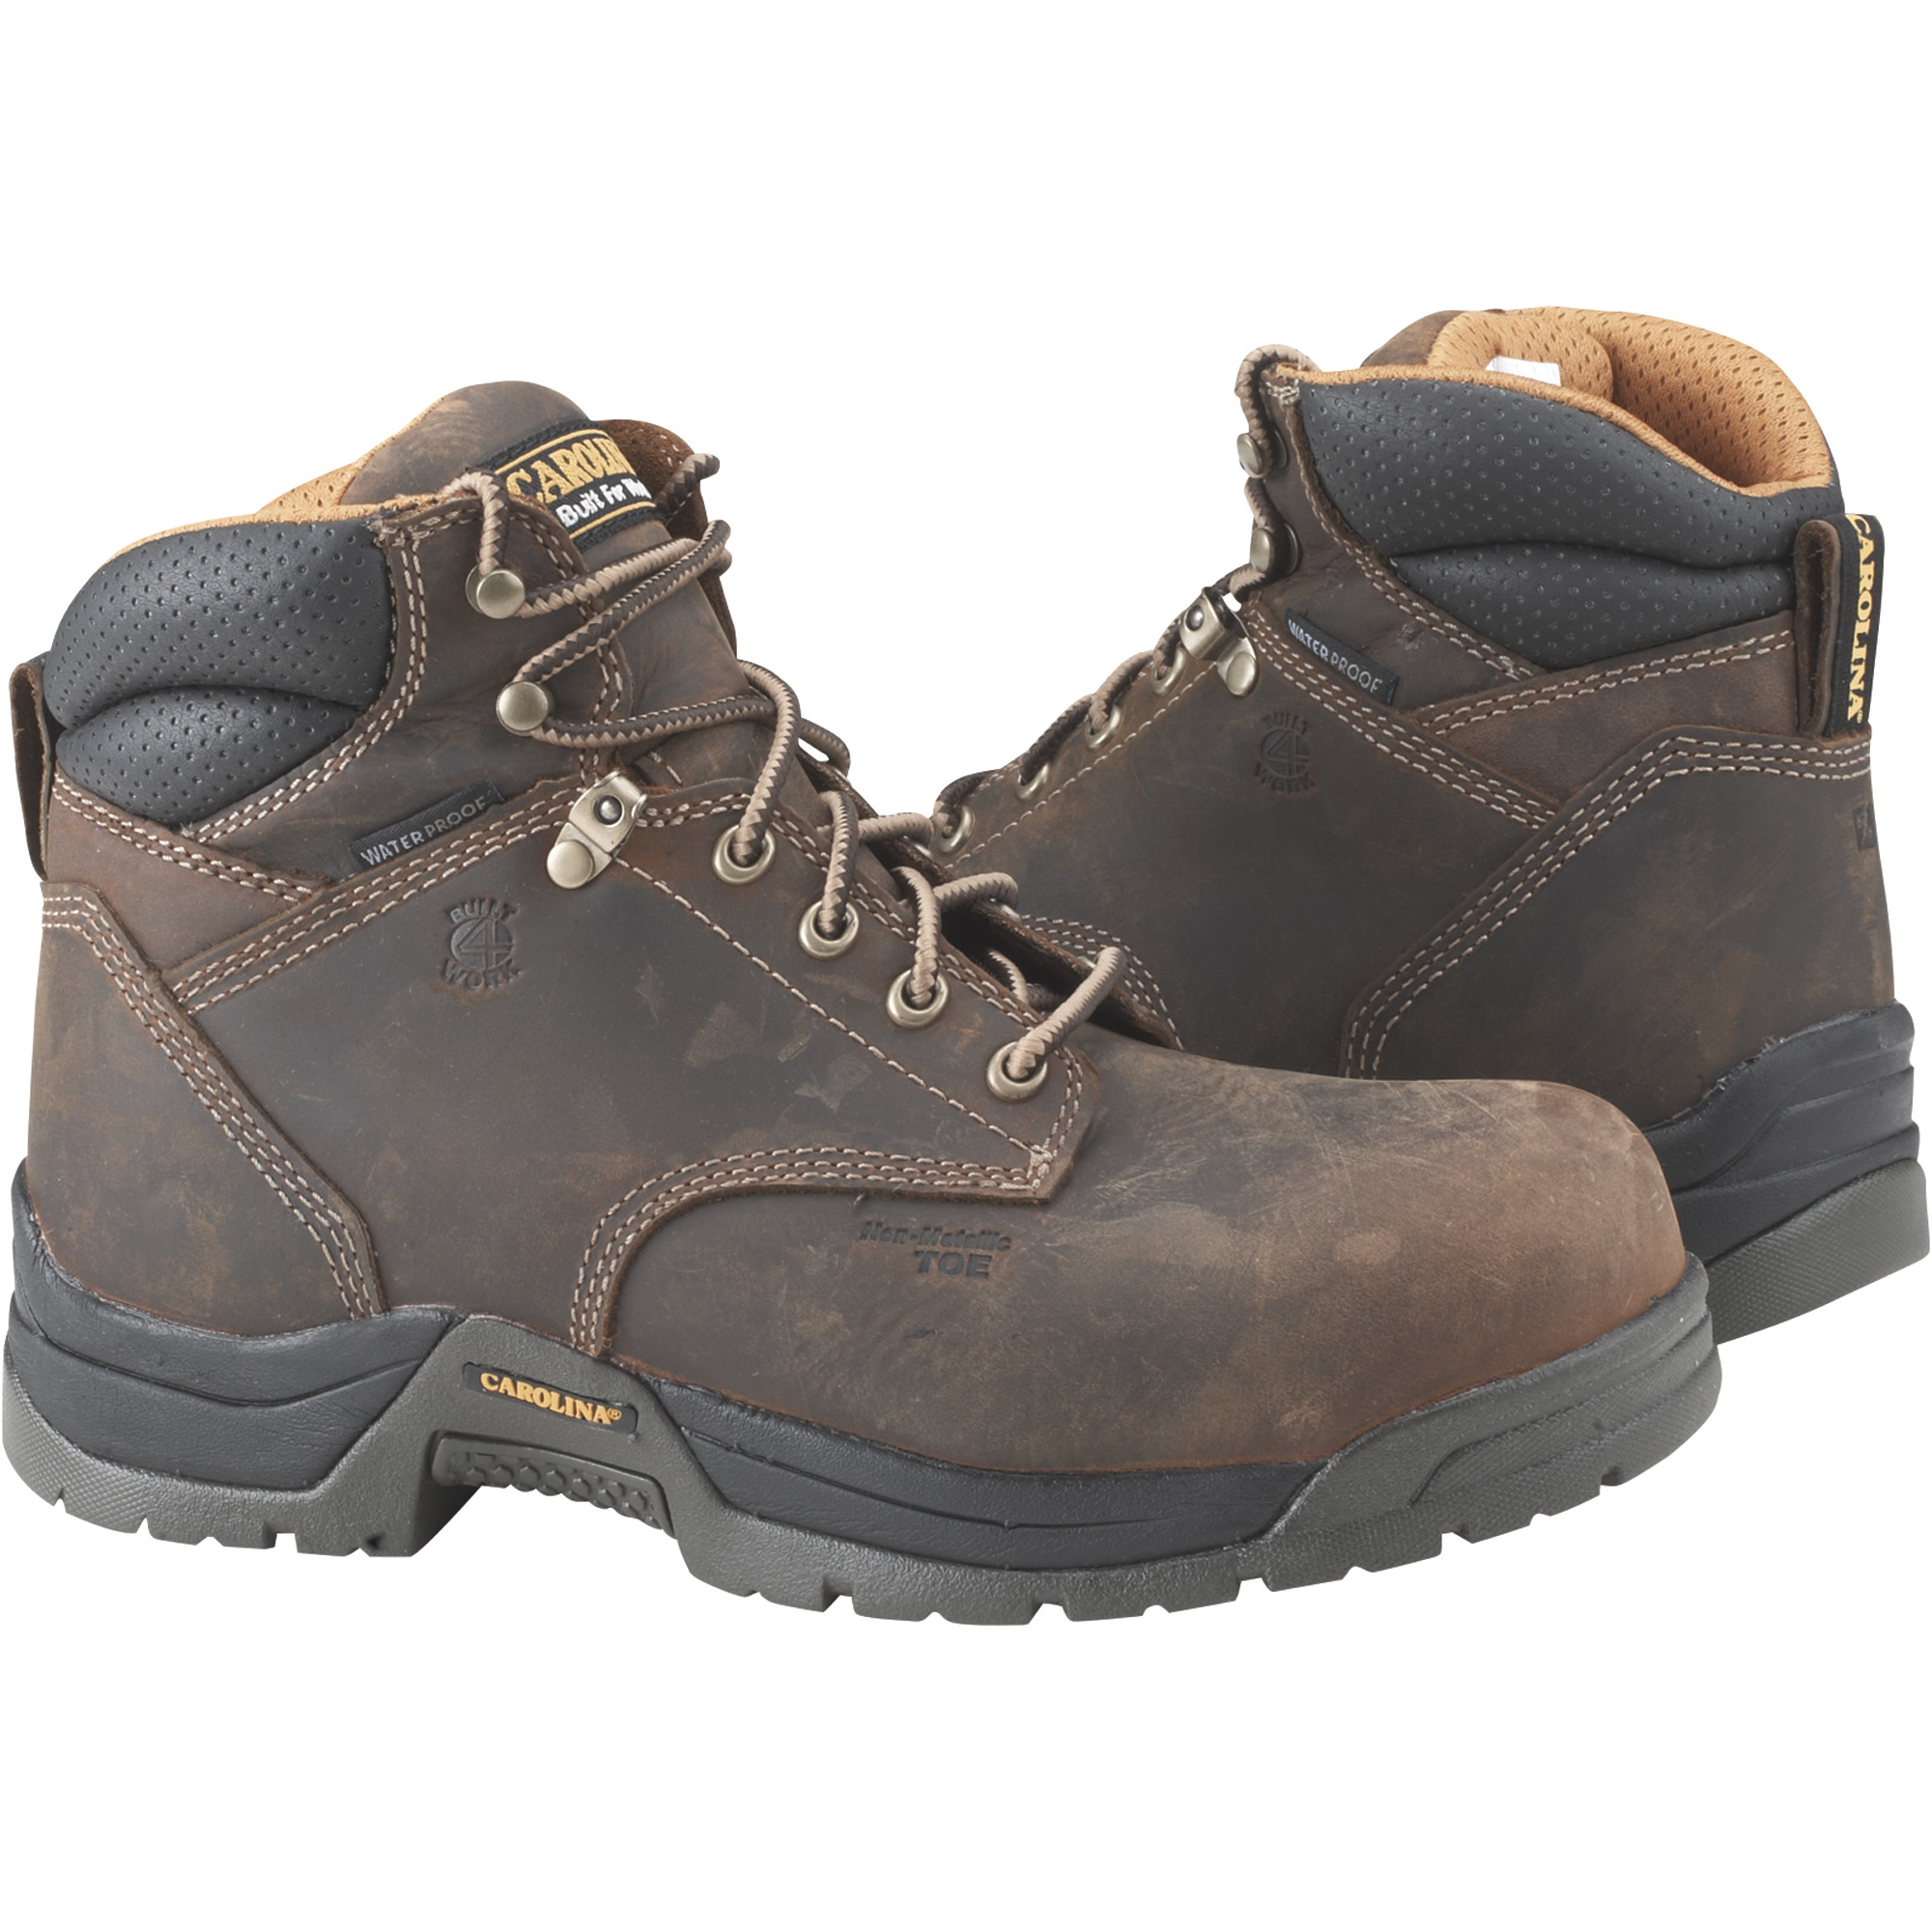 Carolina Men's 6Inch Waterproof Safety Toe Work Boots — Brown, Size 8 Wide, Model CA5520 -  Carolina Shoe, 726363508921